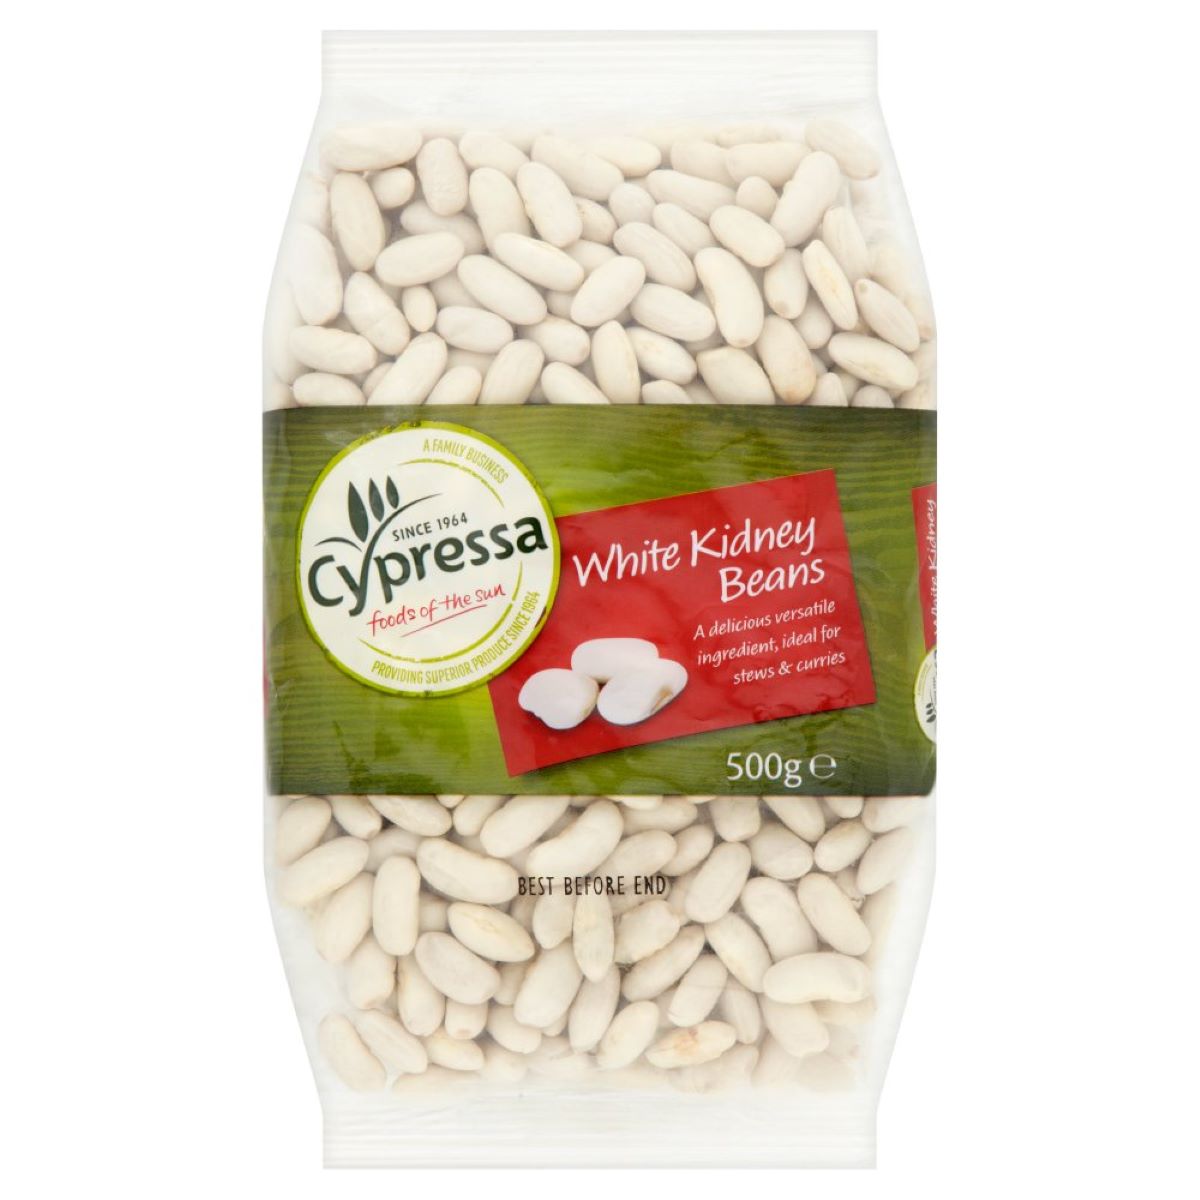 Cypressa White Kidney Beans 500g